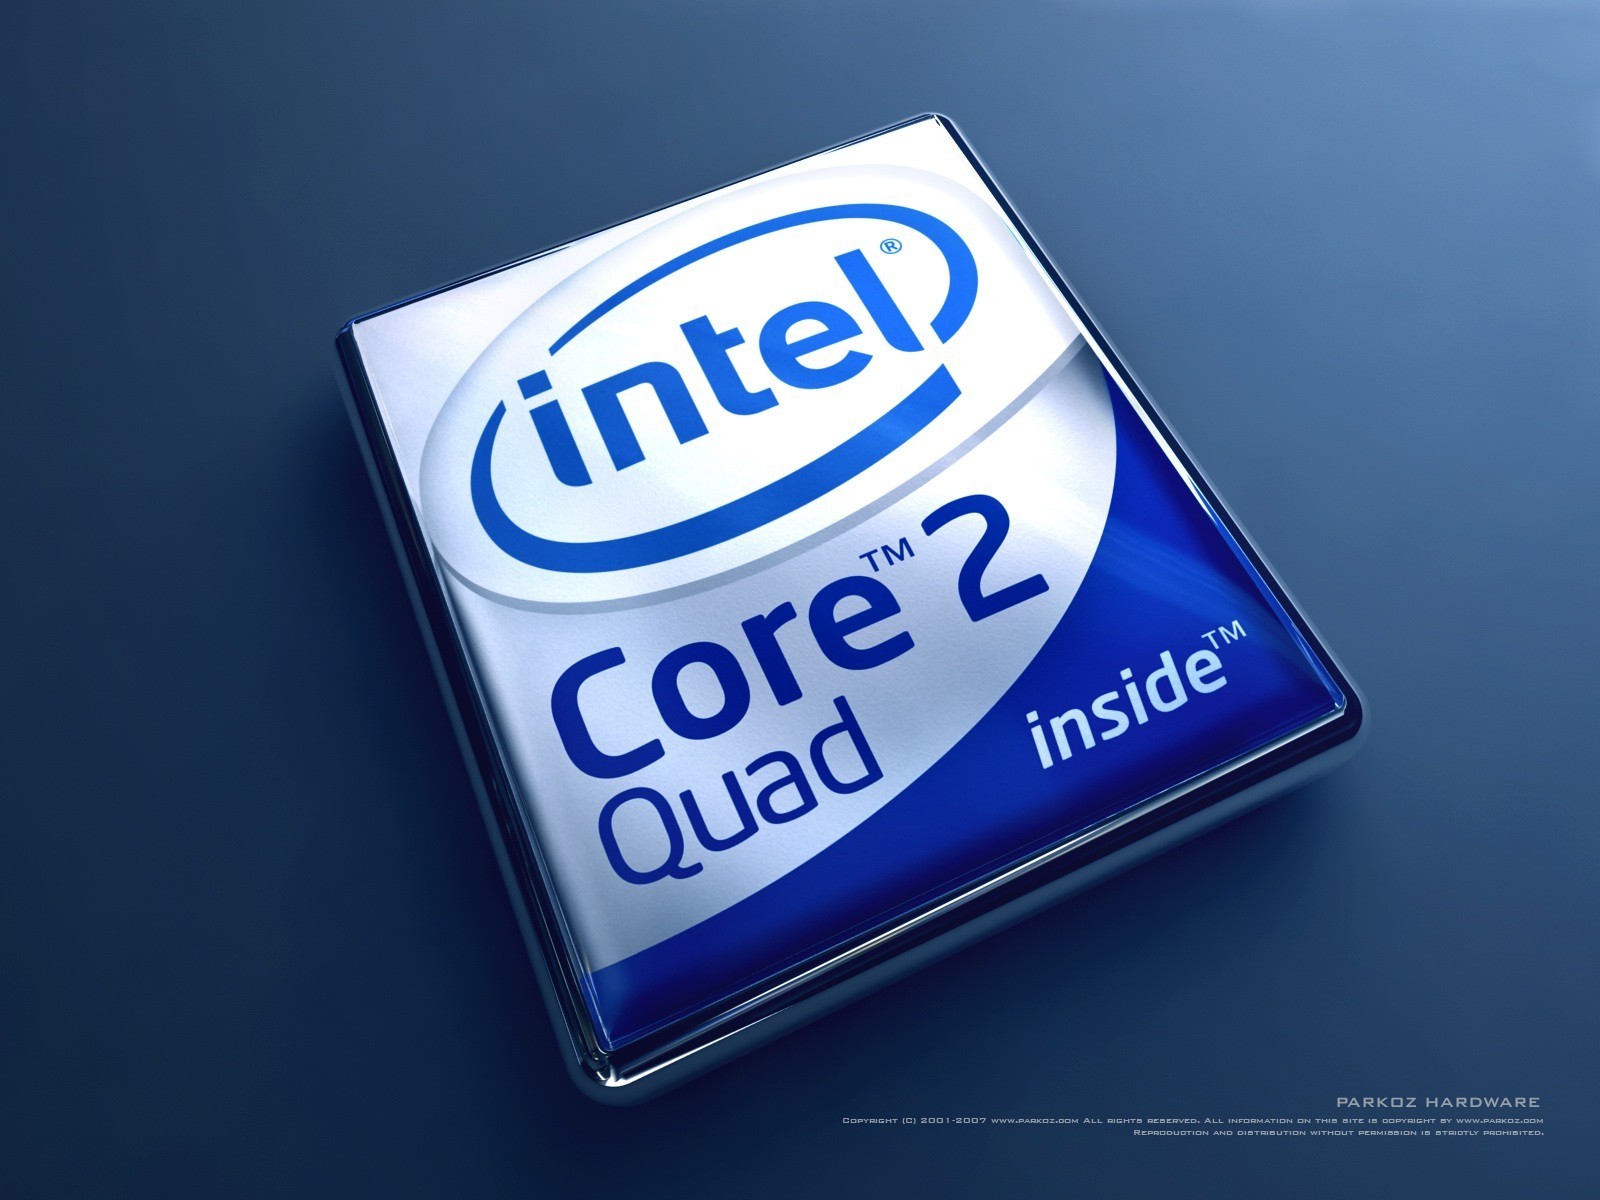 Core i3 games. Intel Core 2 Duo inside. Интел Core 2 Duo. Intel Core 2 Duo logo. Процессор Intel Core 2 Quad.